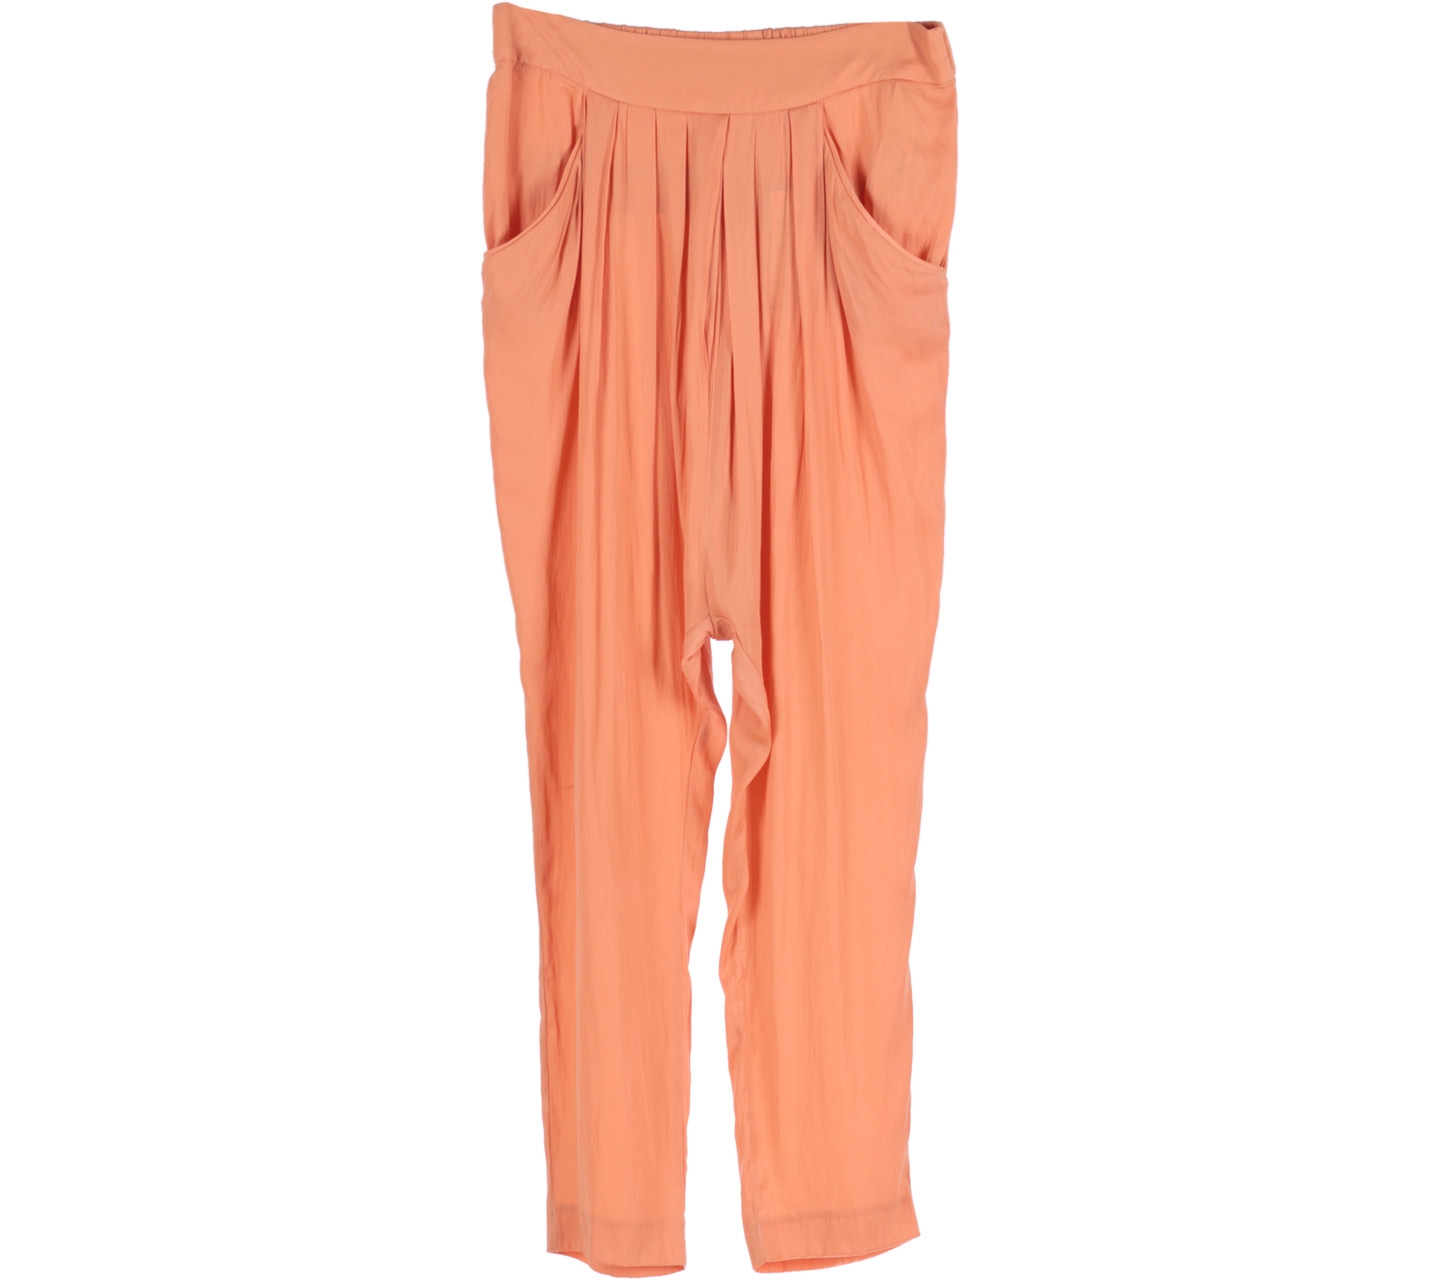 Zara Orange Pants